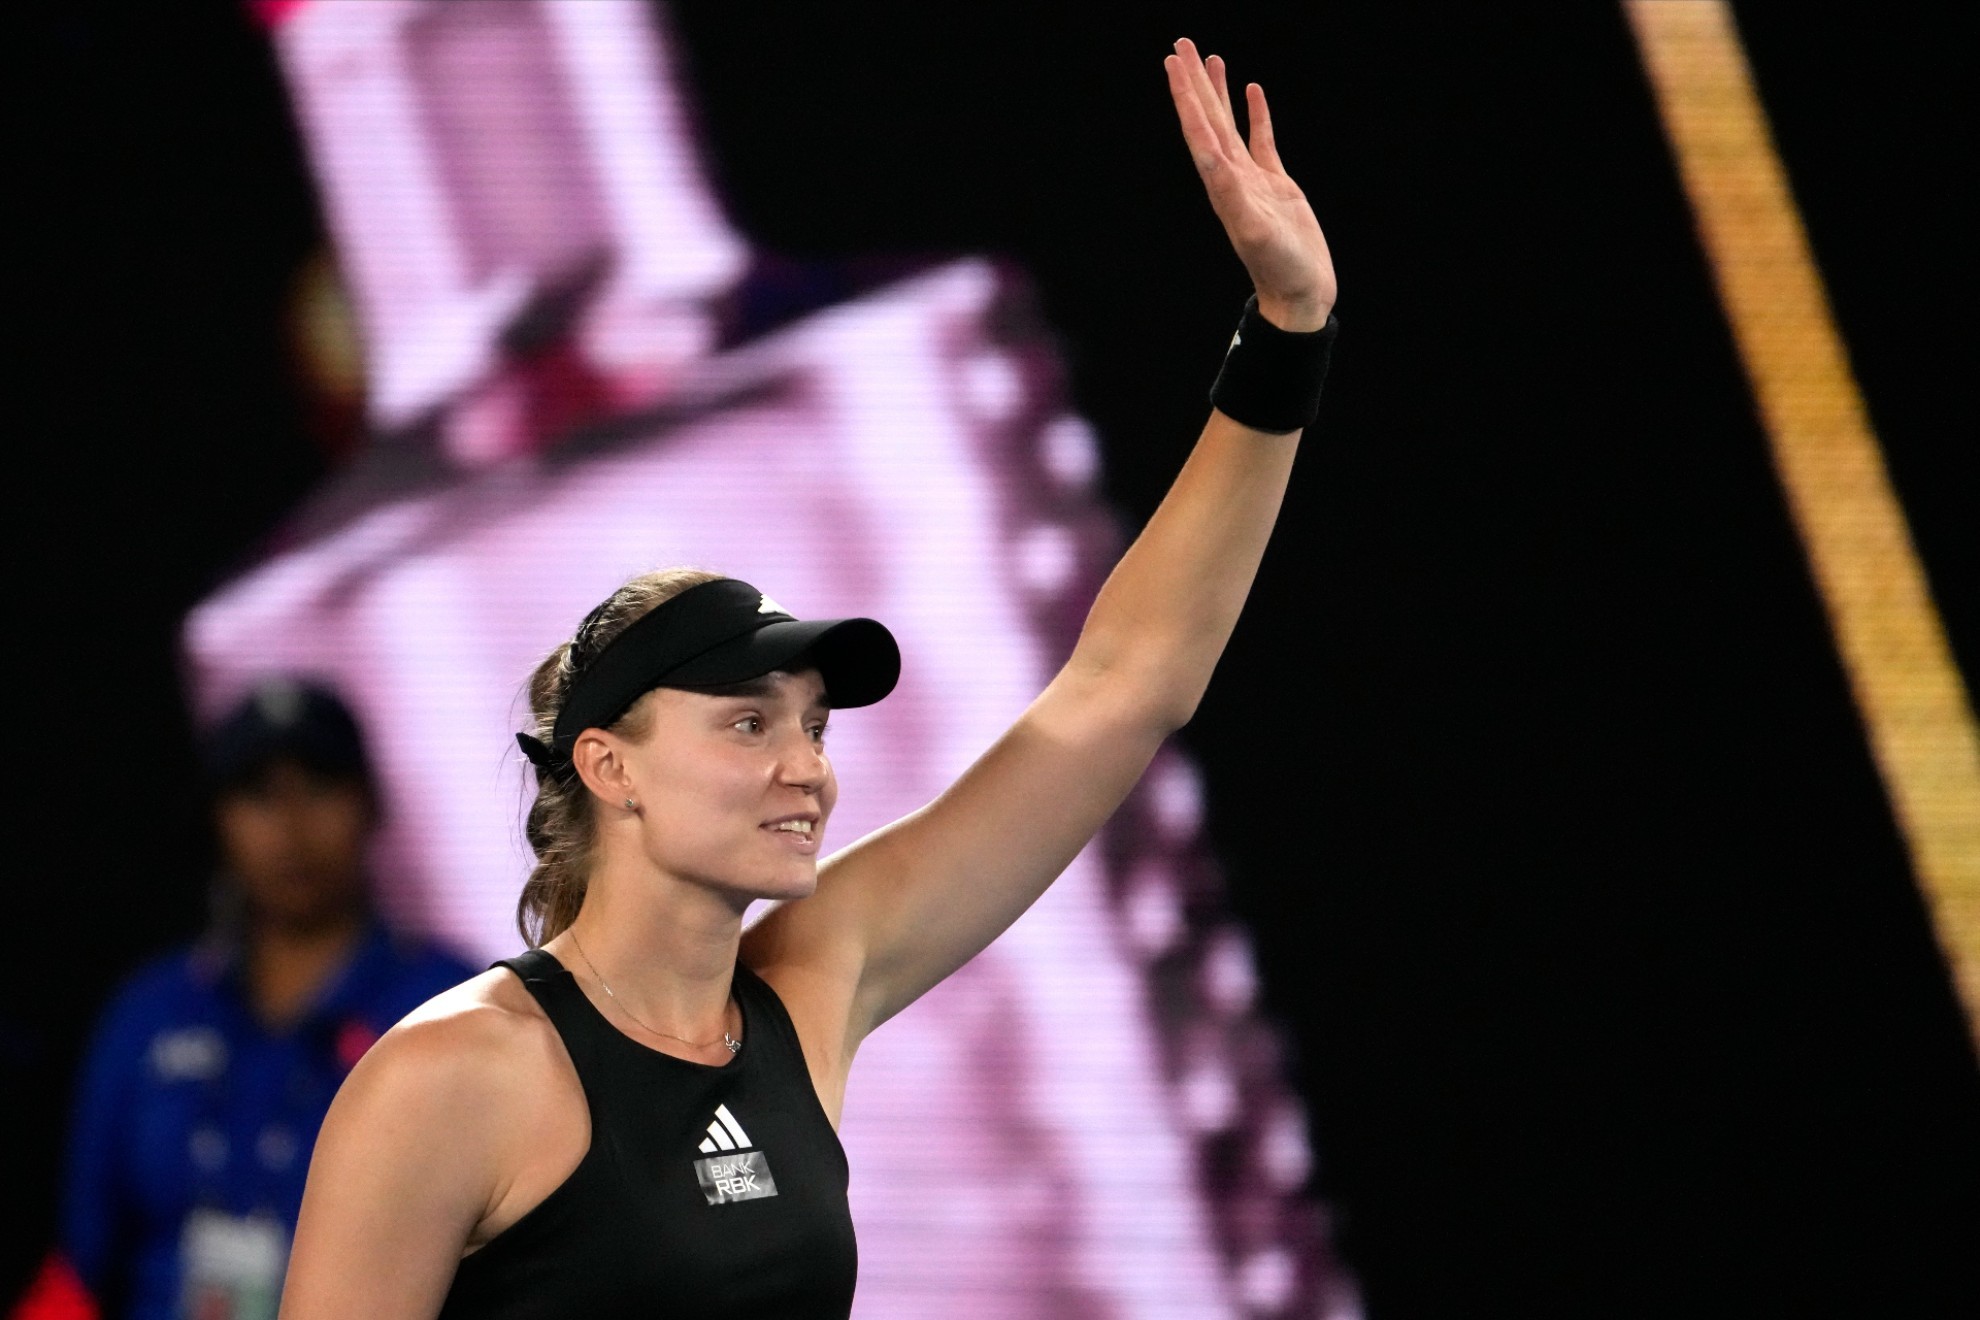 Elena Rybakina of Kazakhstan waves after defeating Victoria Azarenka in their semifinal match at the Australian Open